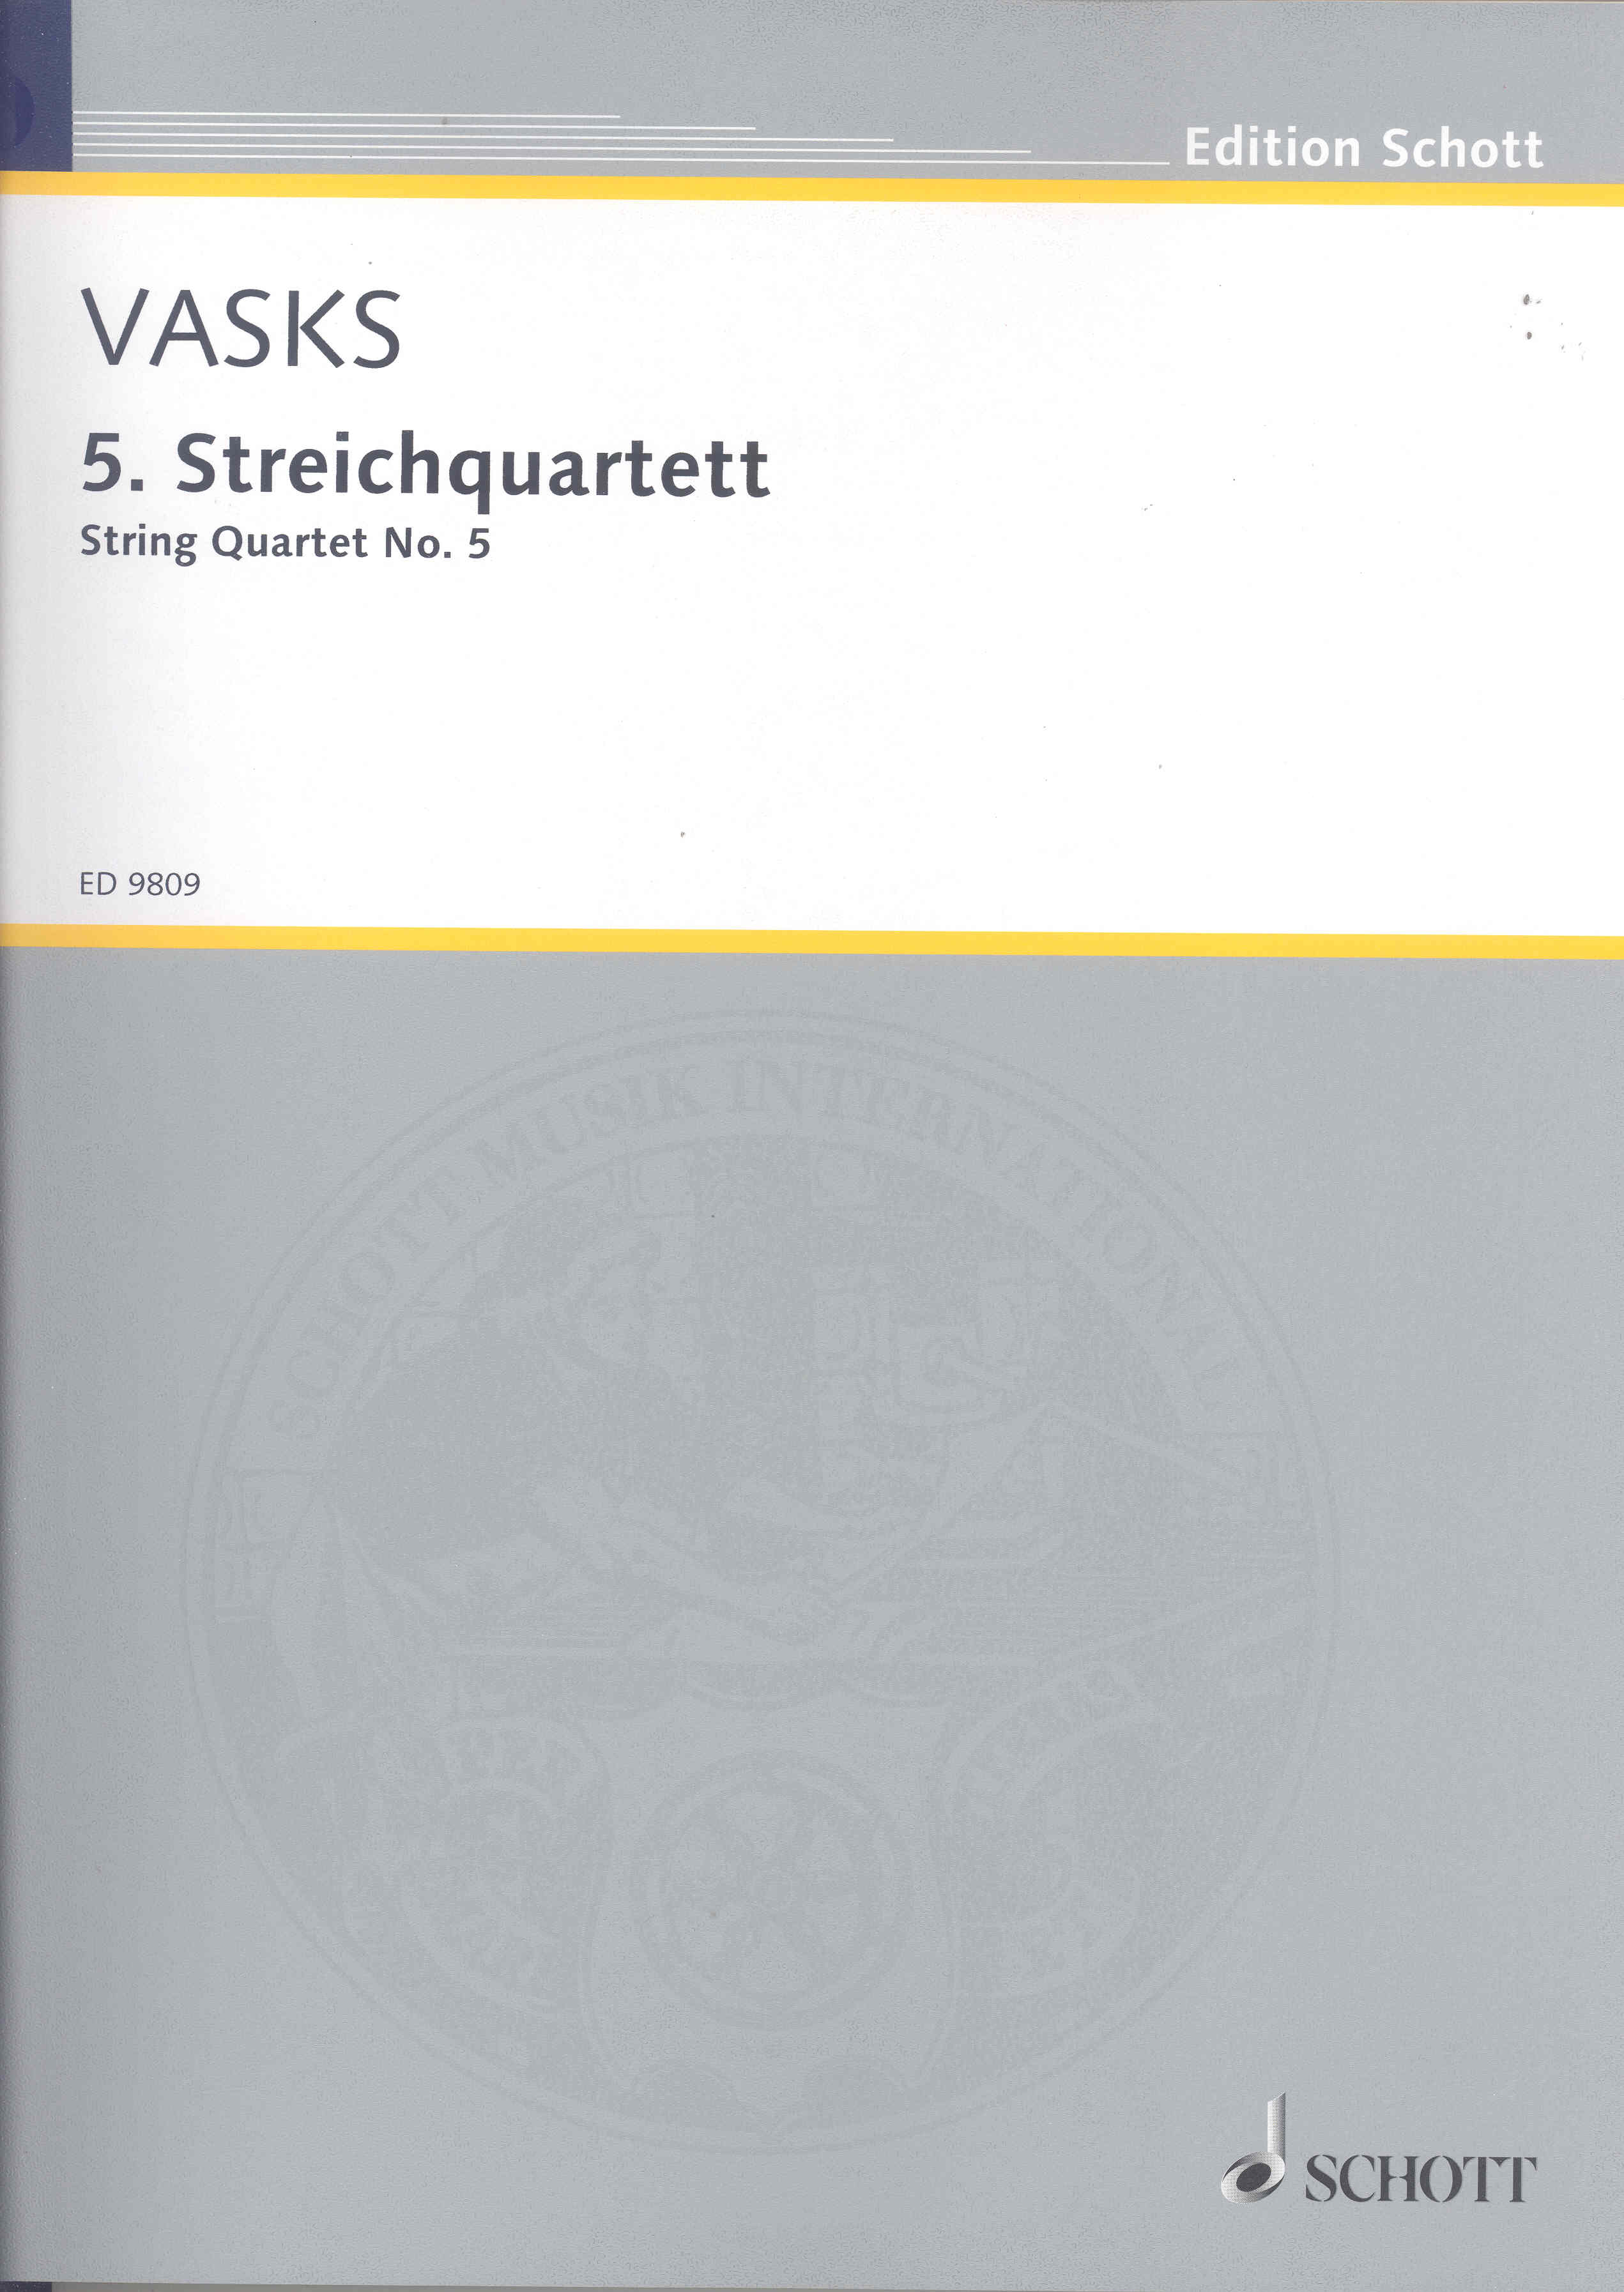 Vasks String Quartet No 5 Score & Parts Sheet Music Songbook